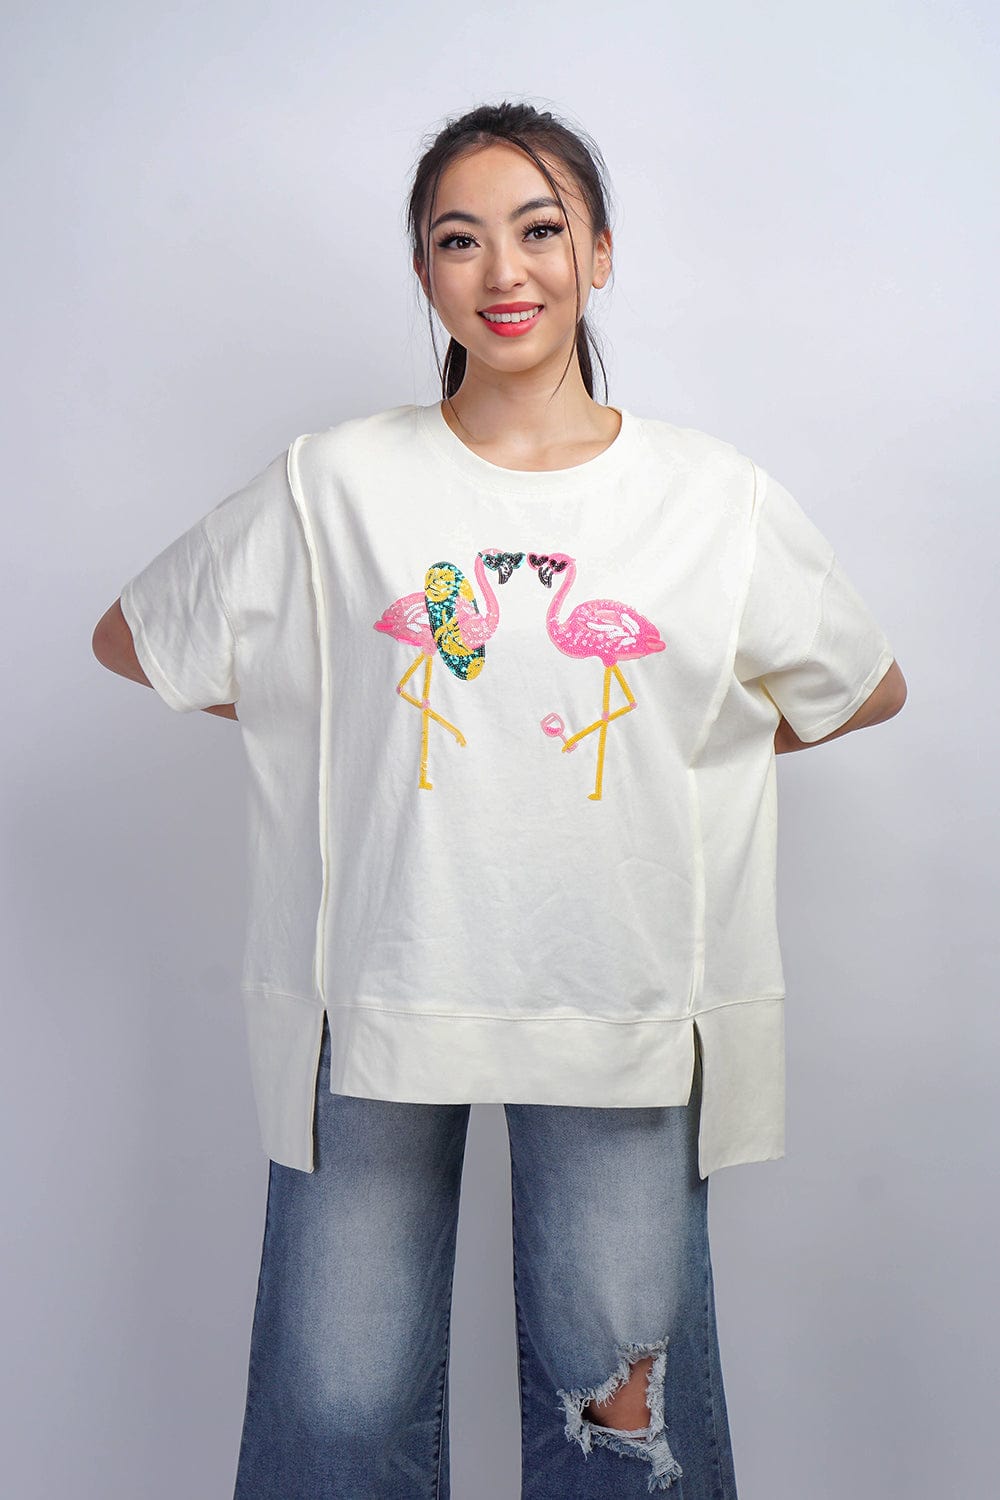 DCD TOPS Vacation Flamingo  Sequins T- Shirt